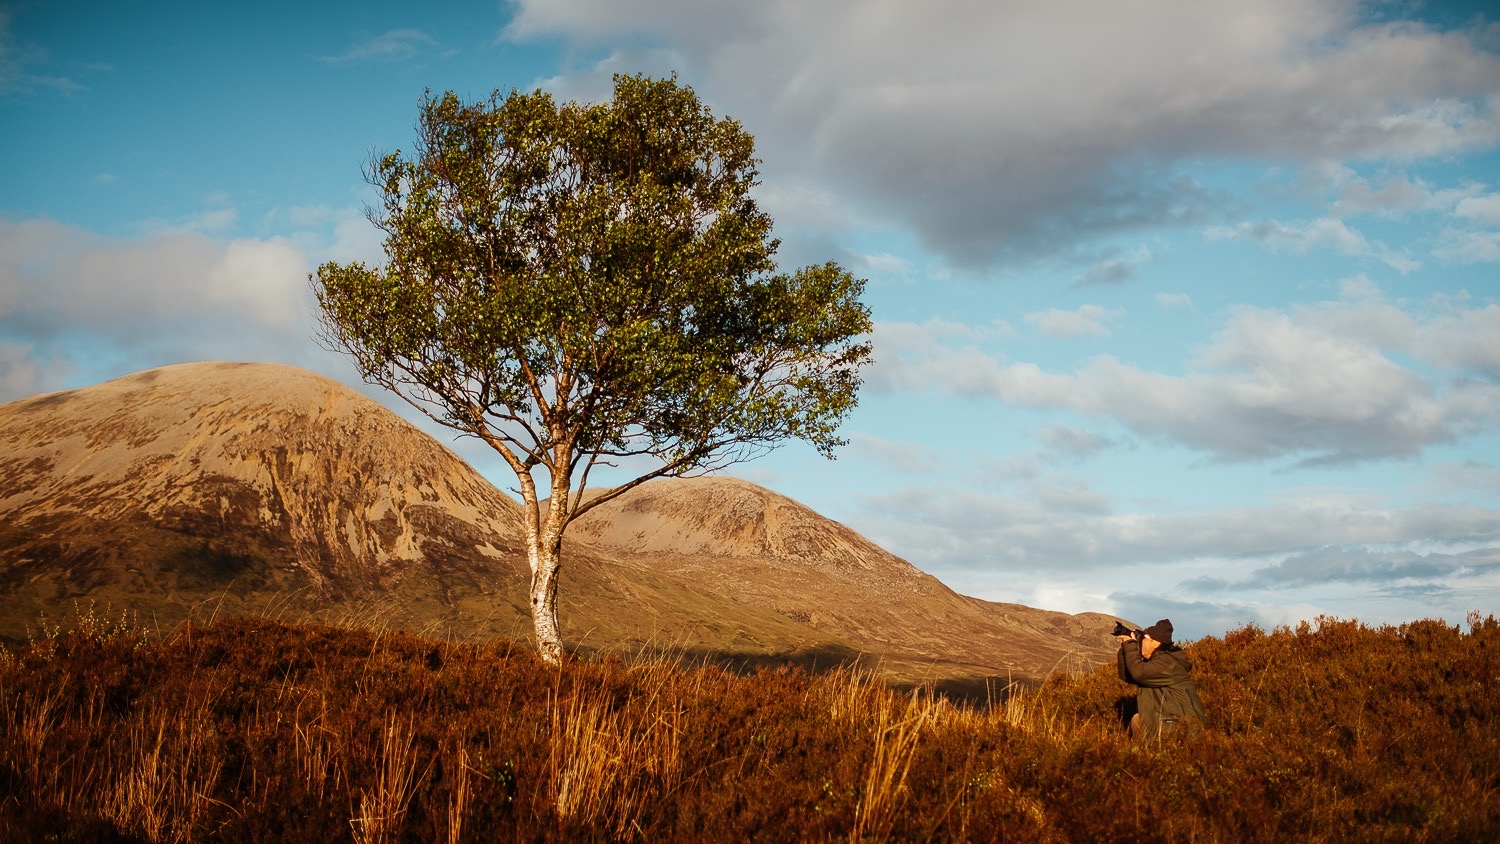 0066-scotland-tamron-le monde de la photo-paysage-20190510201214-compress.jpg